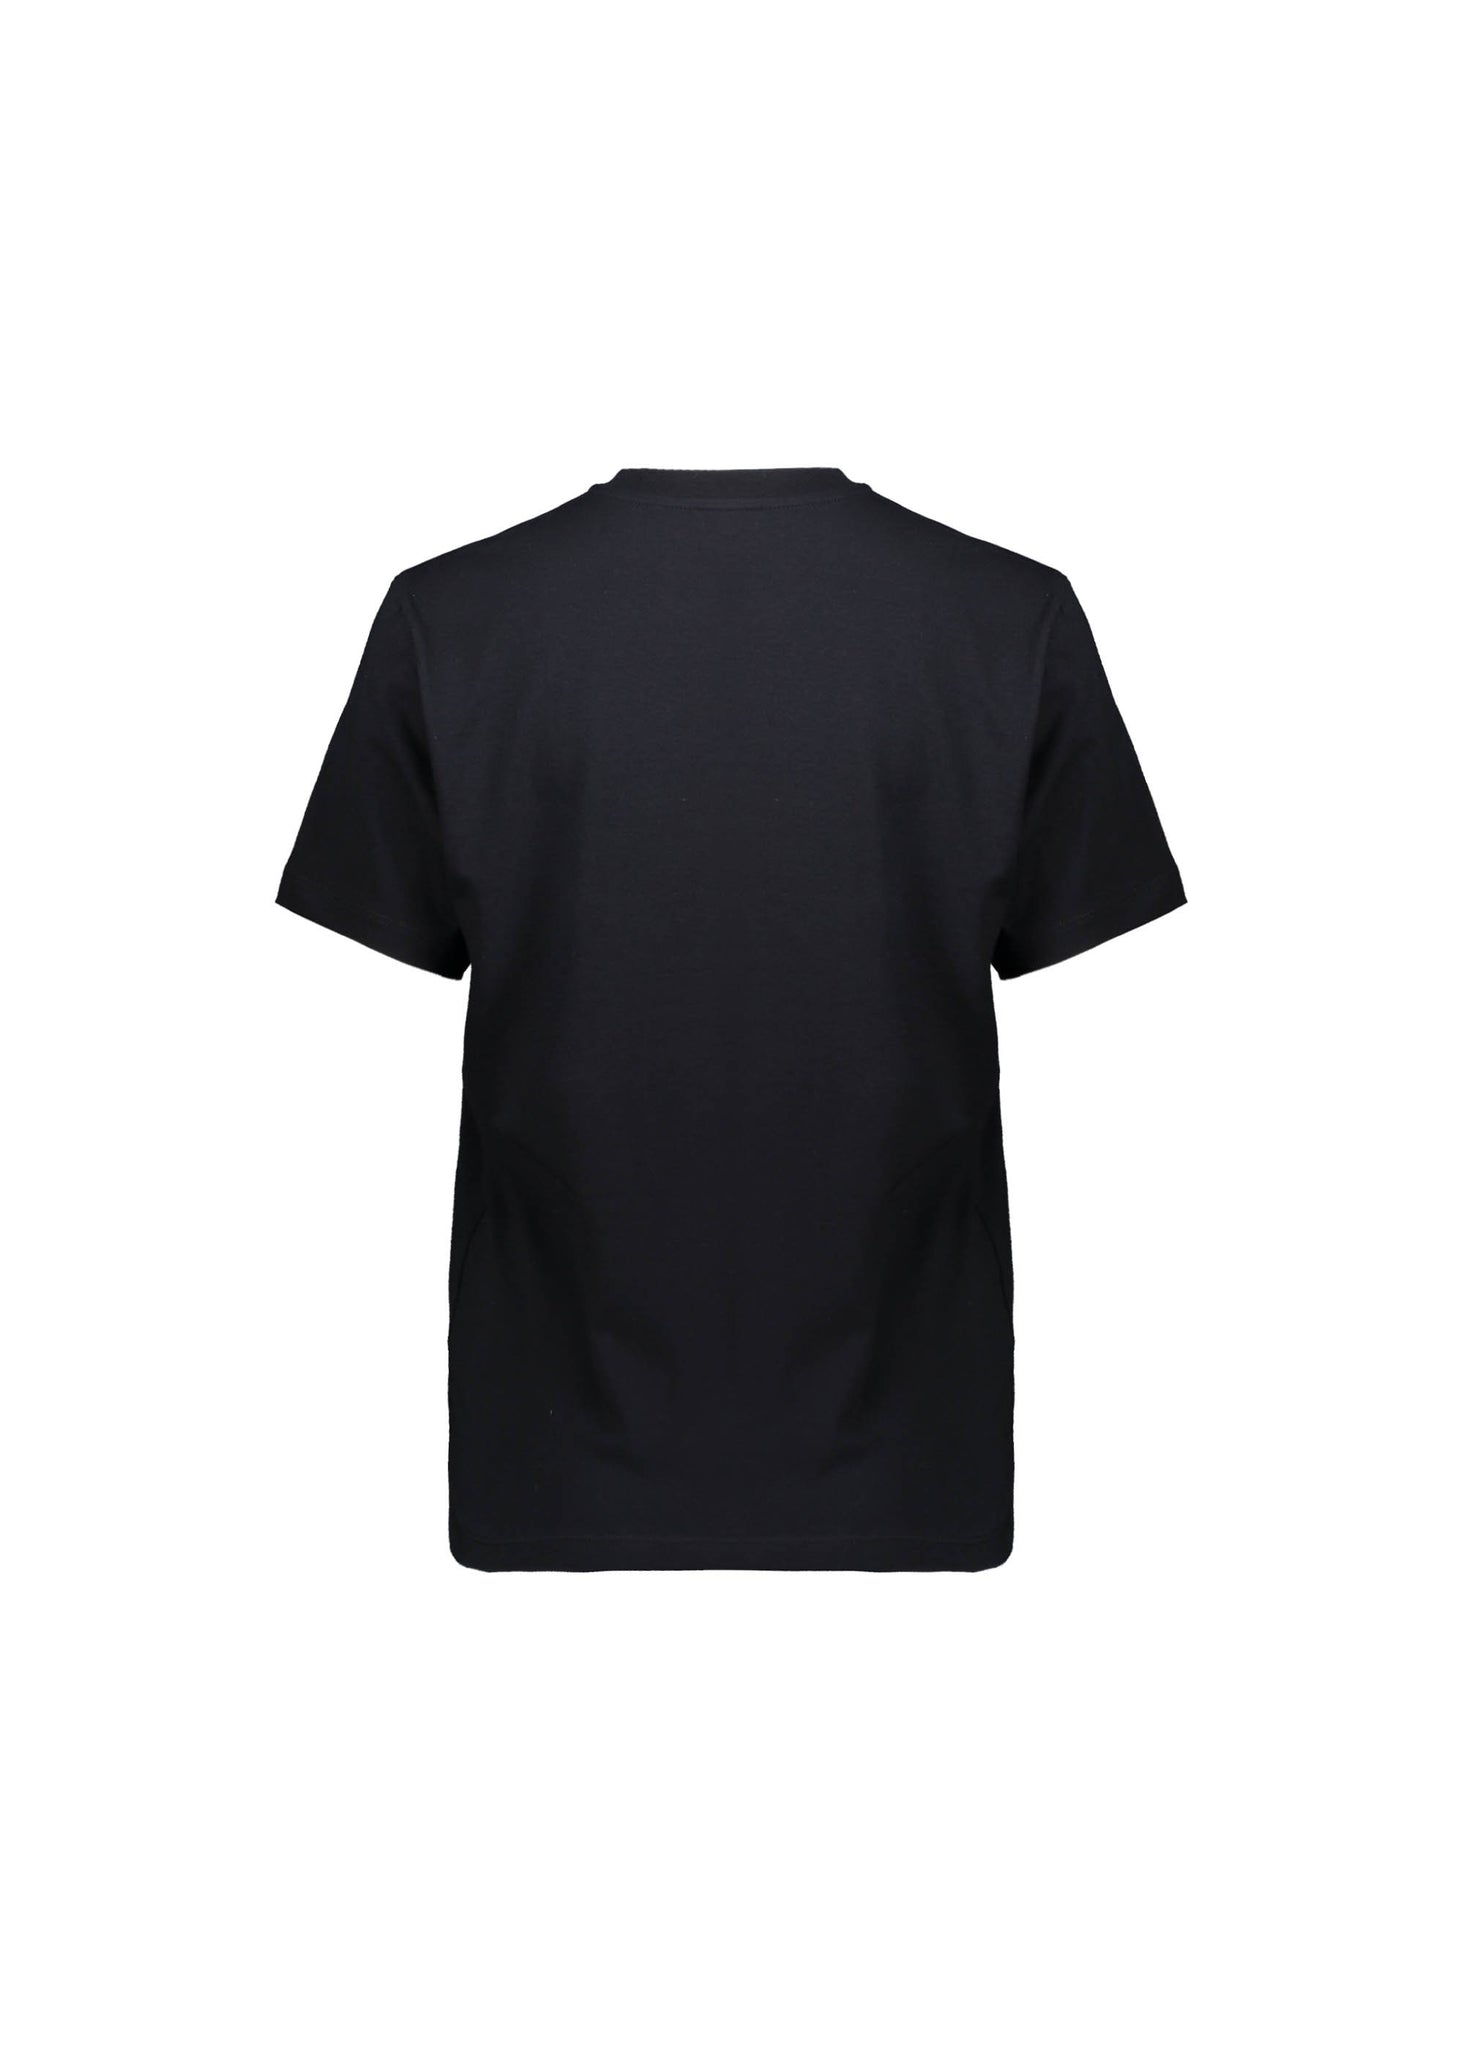 Carhartt WIP Love T-shirt - Black